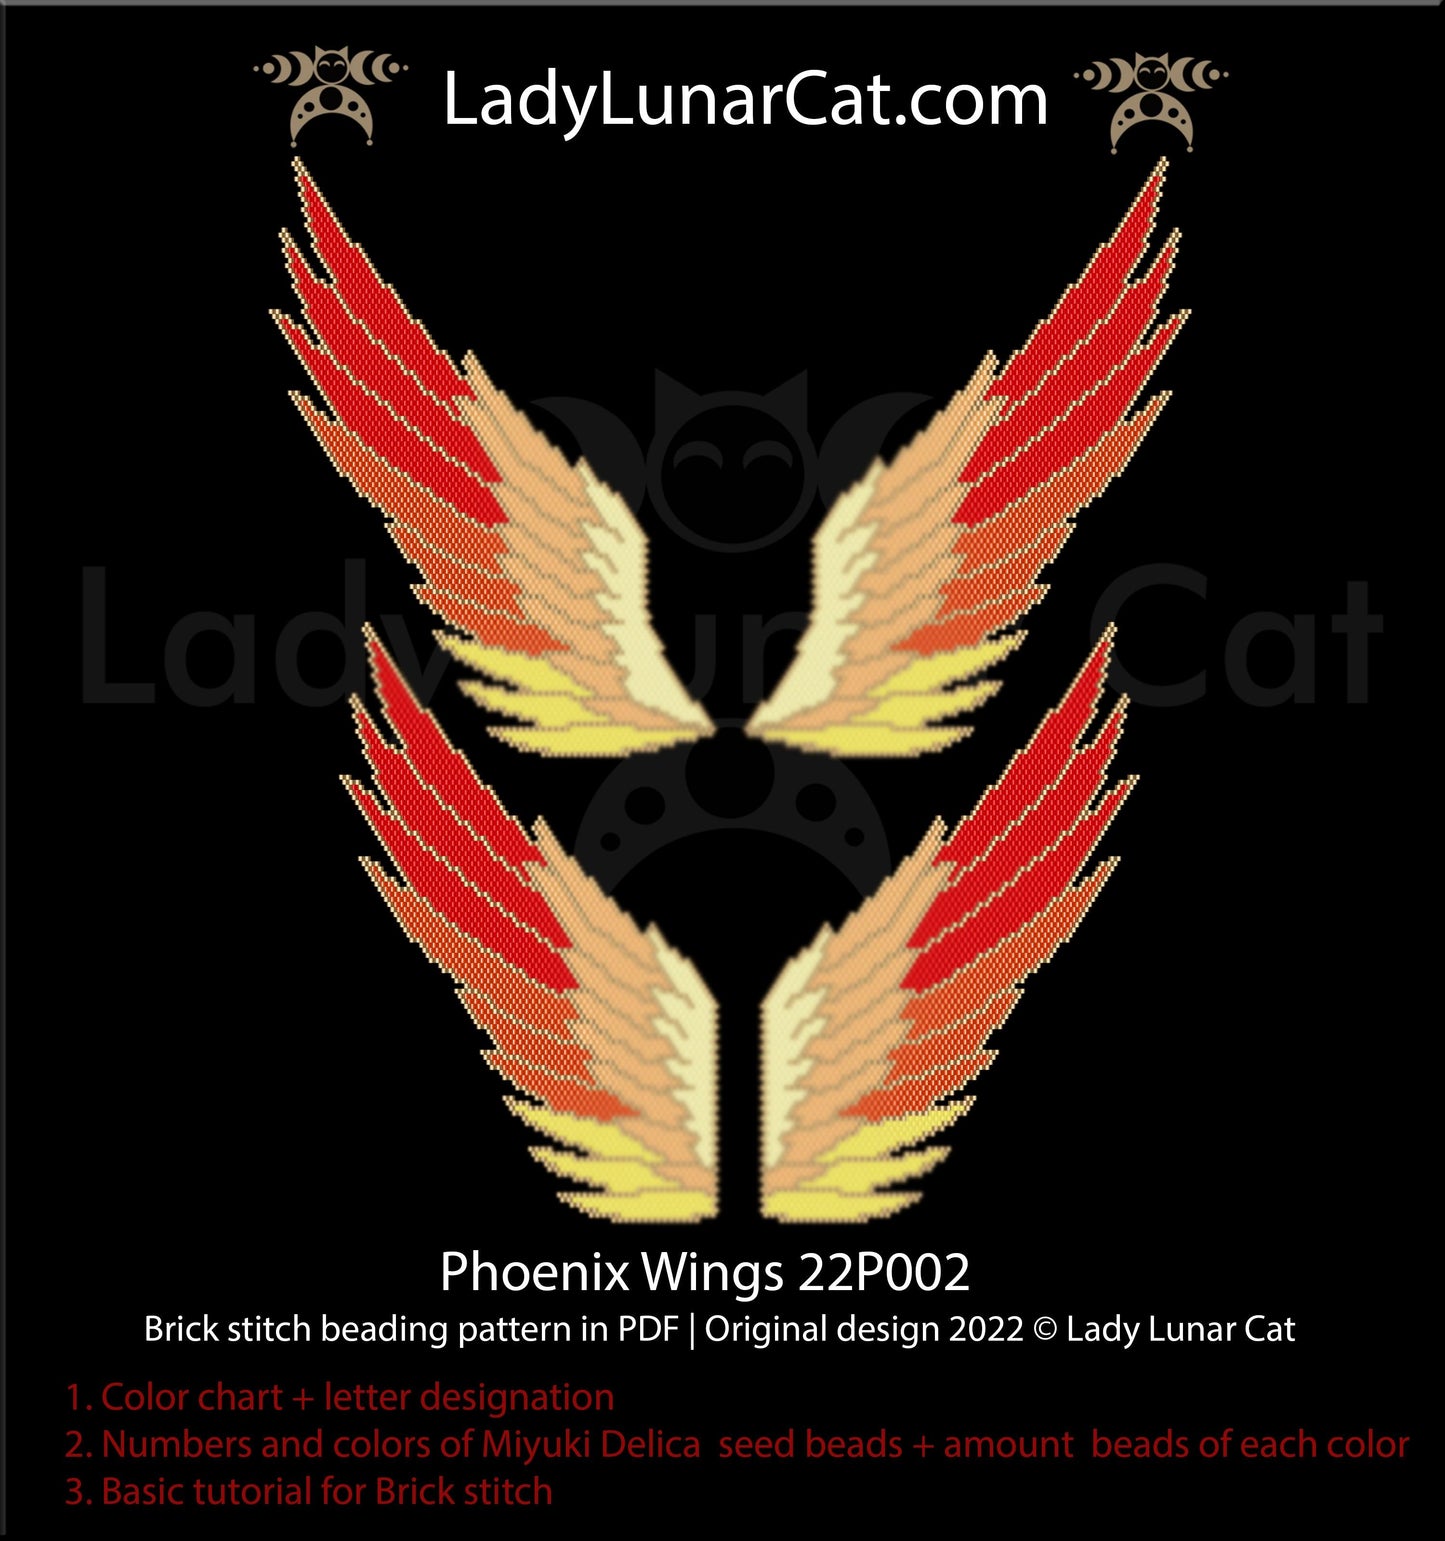 Brick stitch pattern for beading Phoenix Wings 22P002 LadyLunarCat